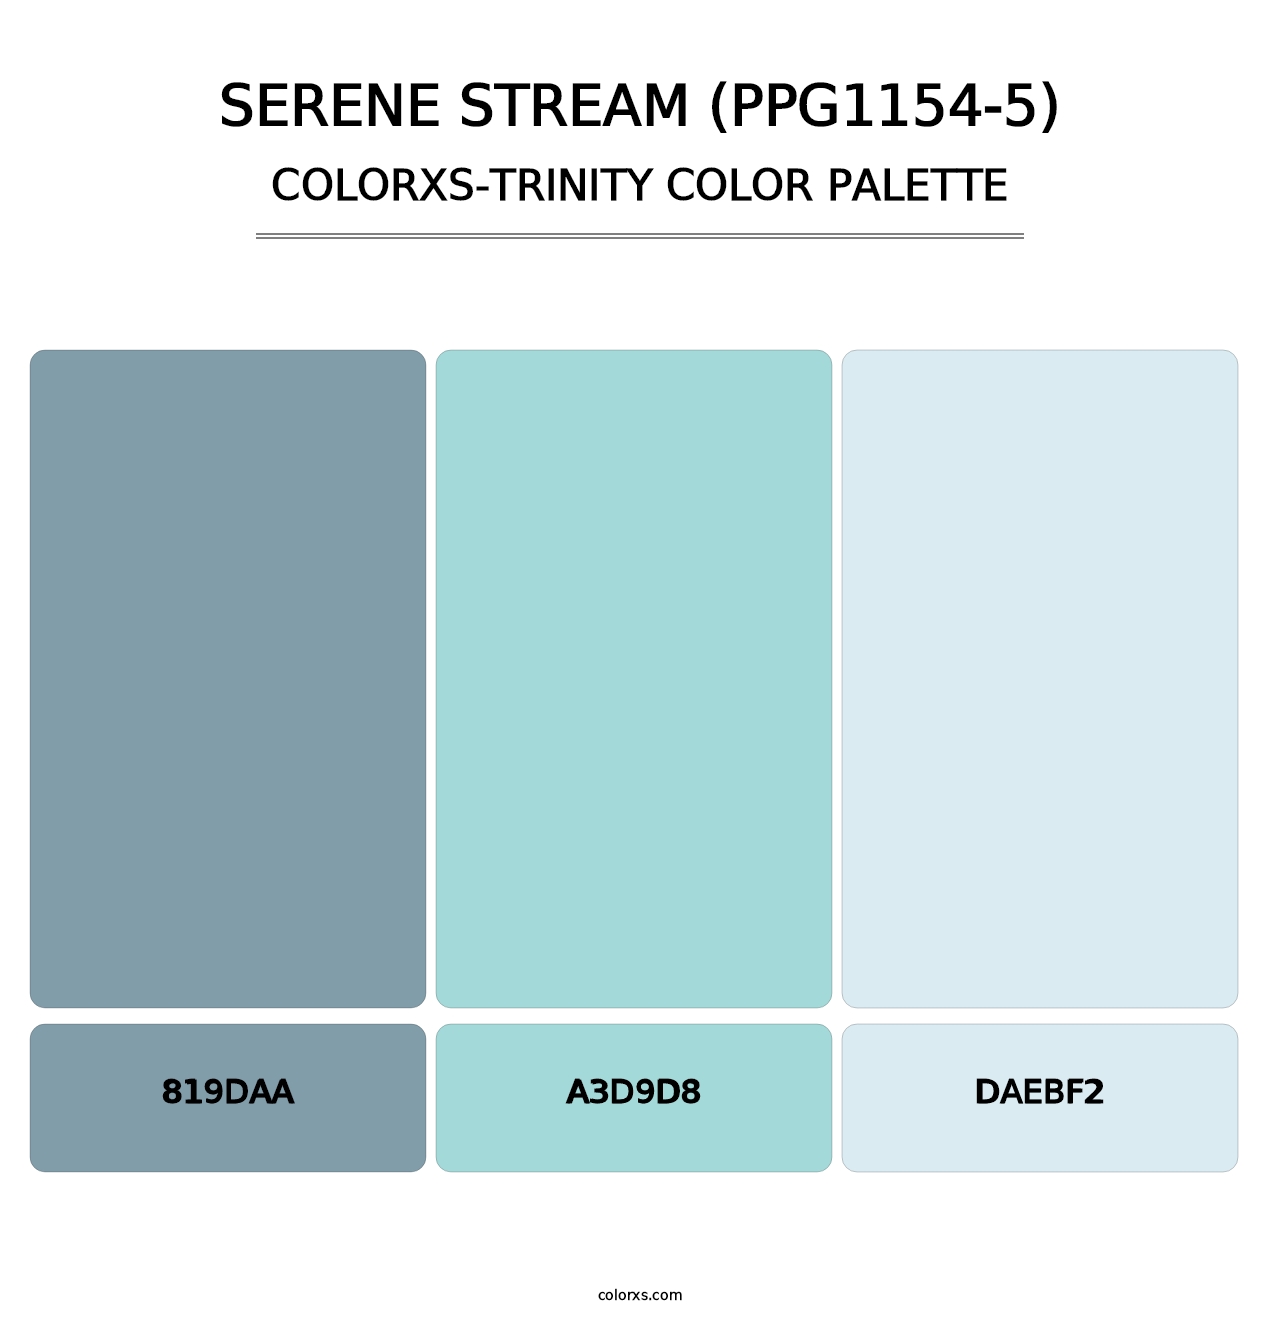 Serene Stream (PPG1154-5) - Colorxs Trinity Palette